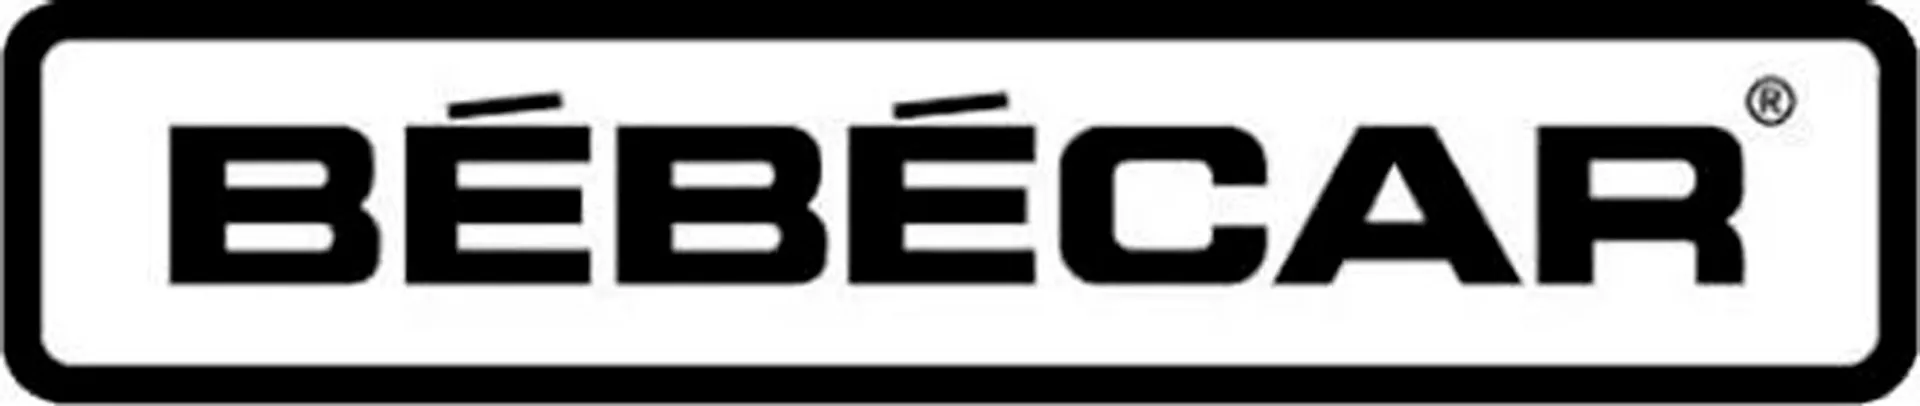 BÉBÉCAR logo de catálogo